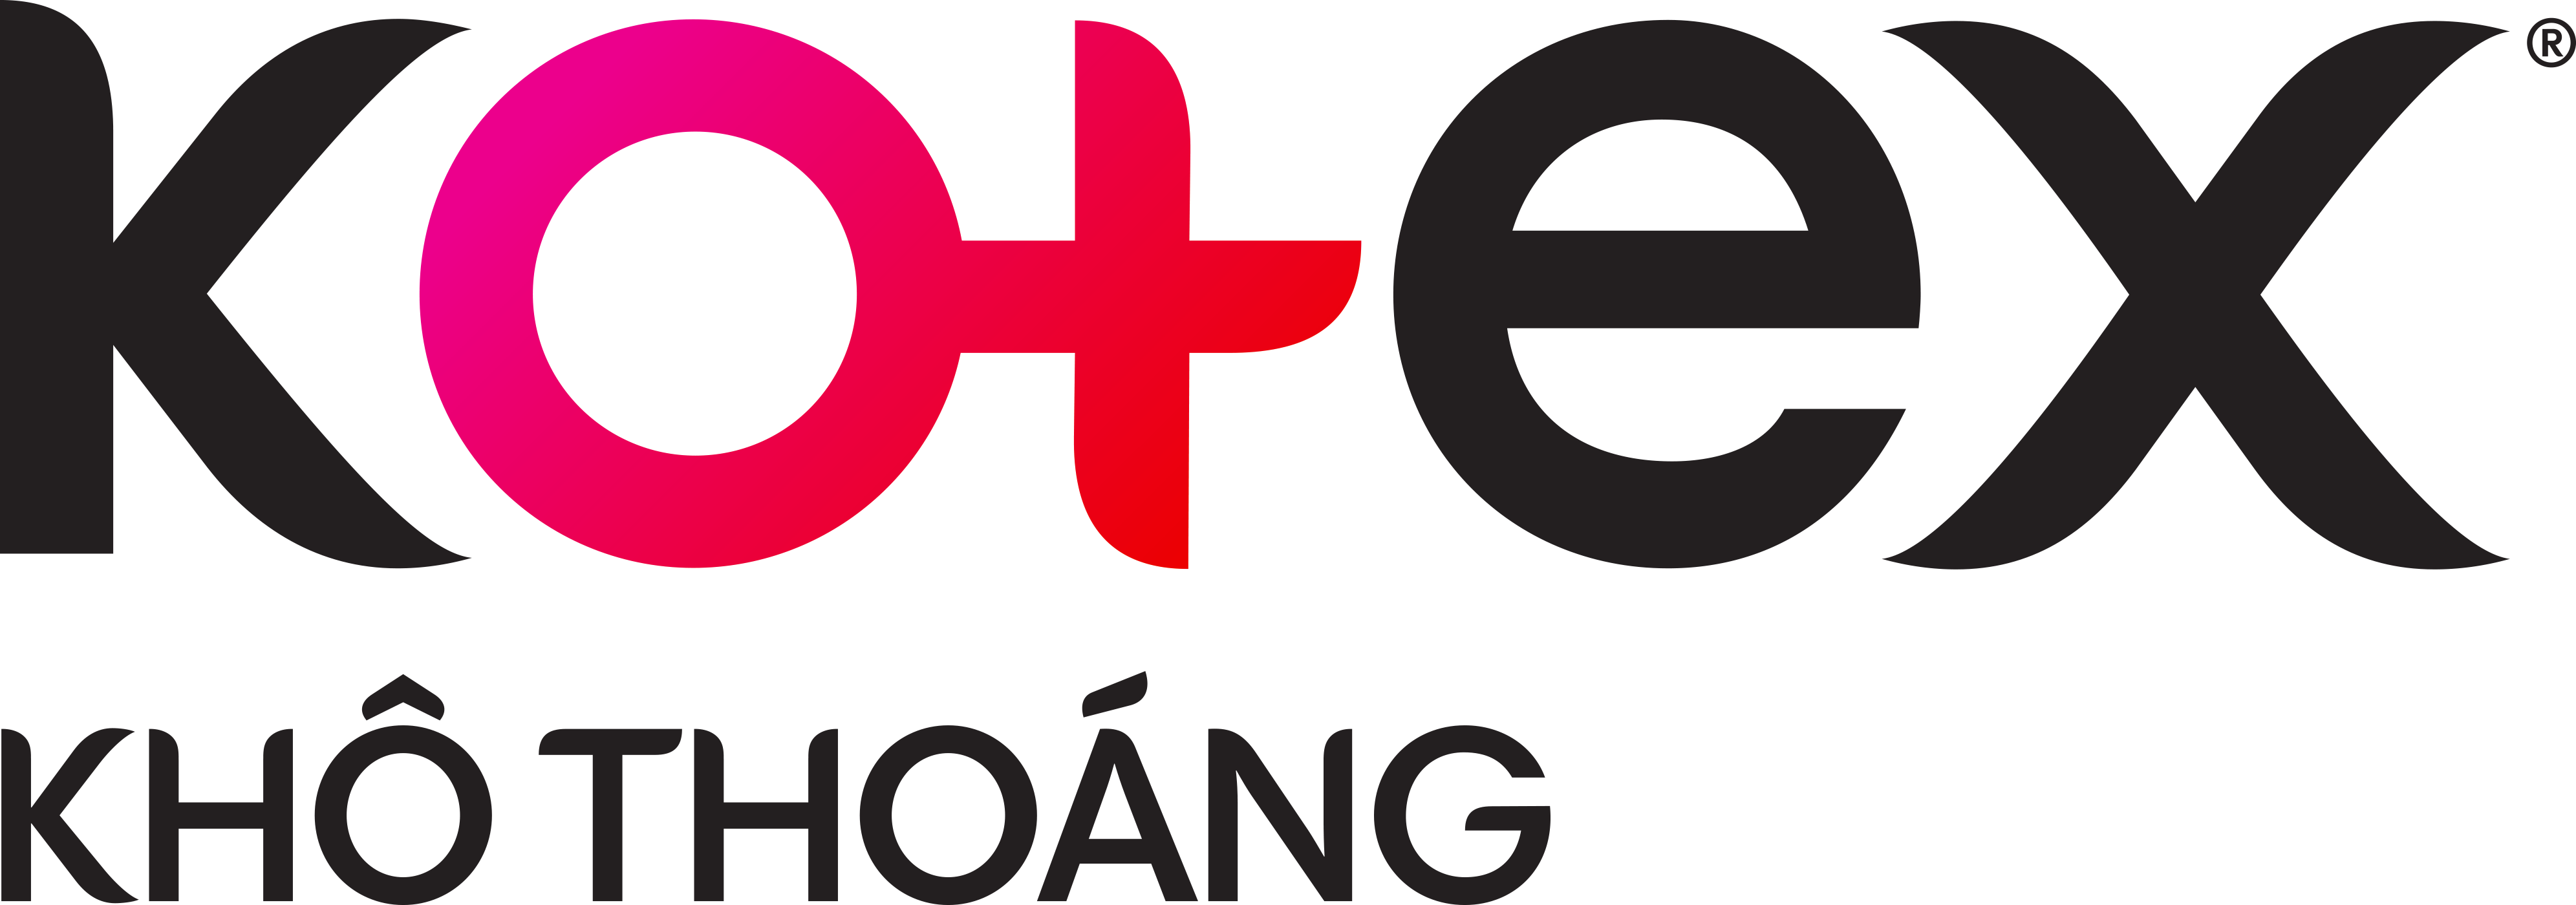 Kotex-logo